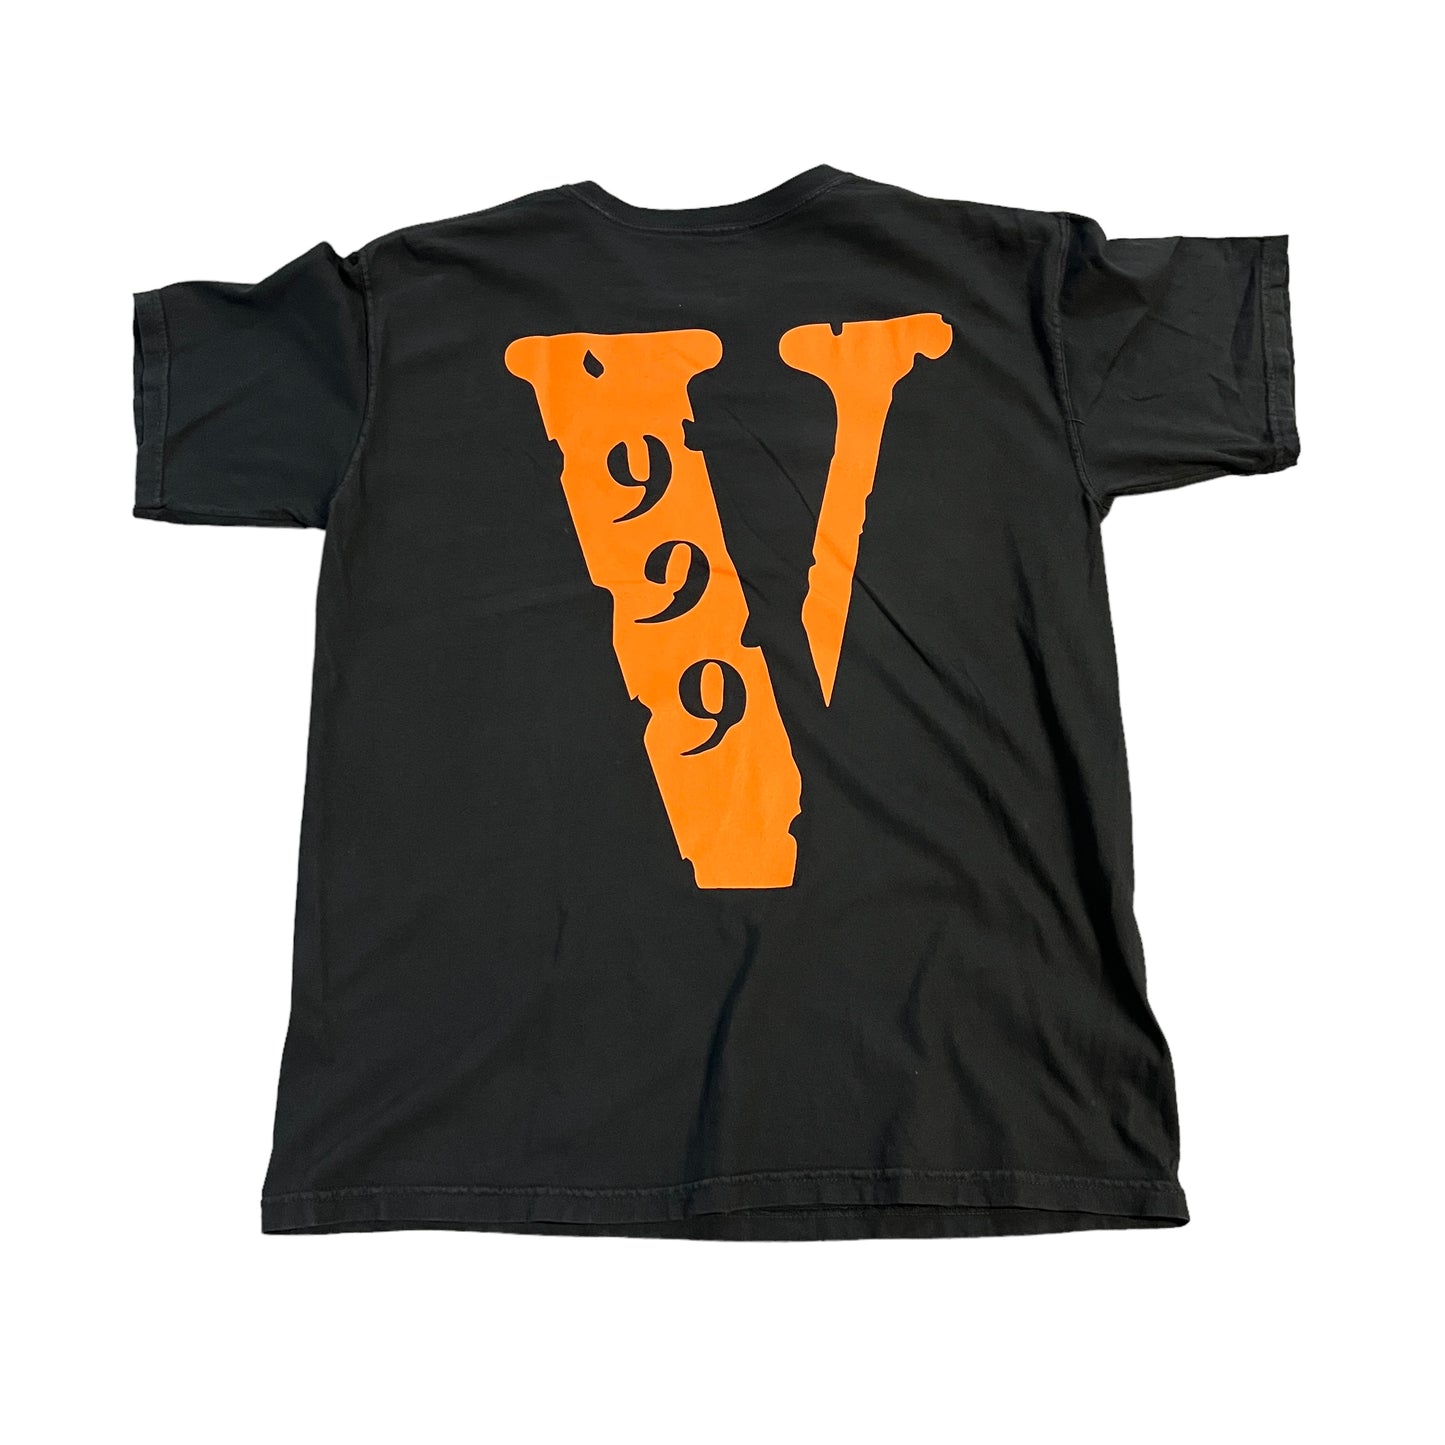 VLONE Juice Wrld Legends Black Shirt